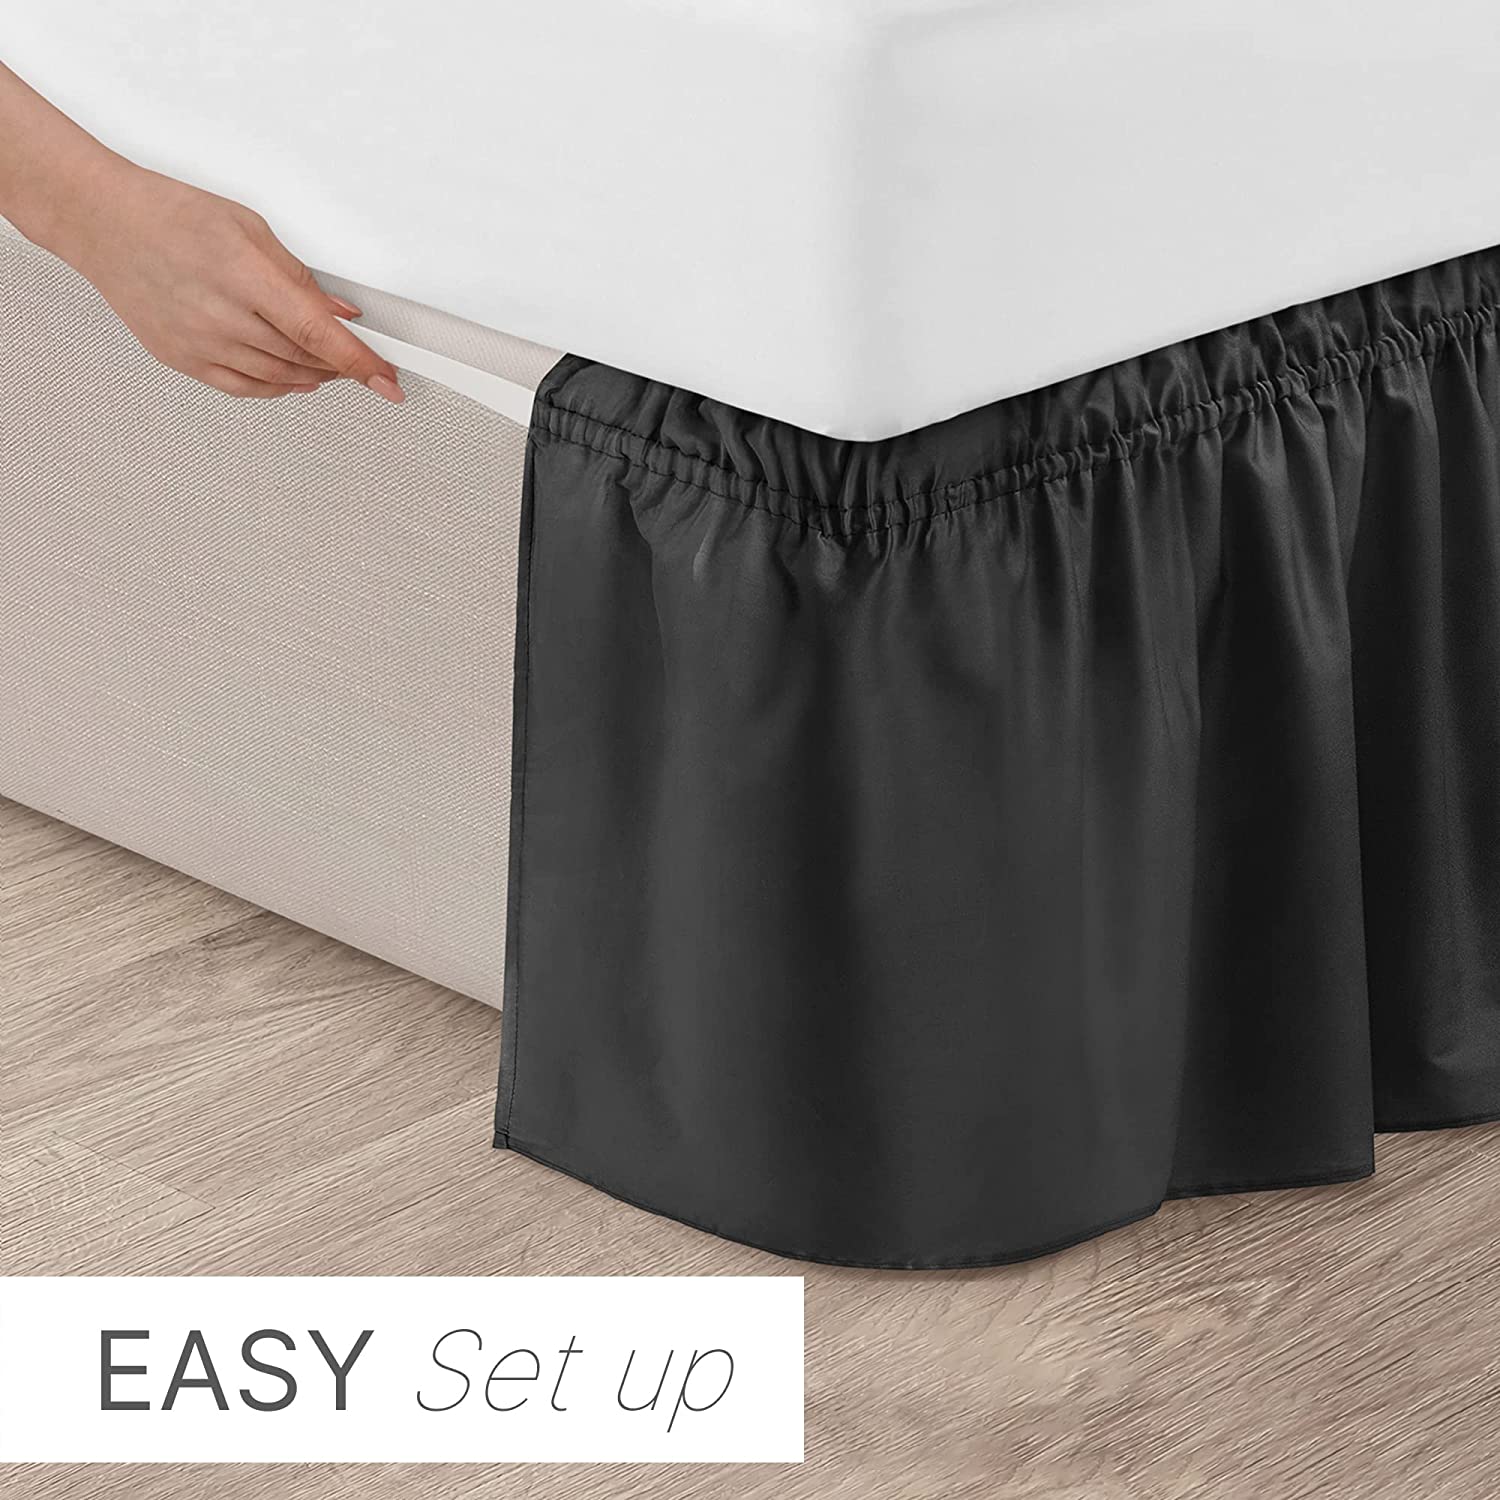 Ruffled Elastic Wrap Around Bedskirt 15 Inch Drop - Black